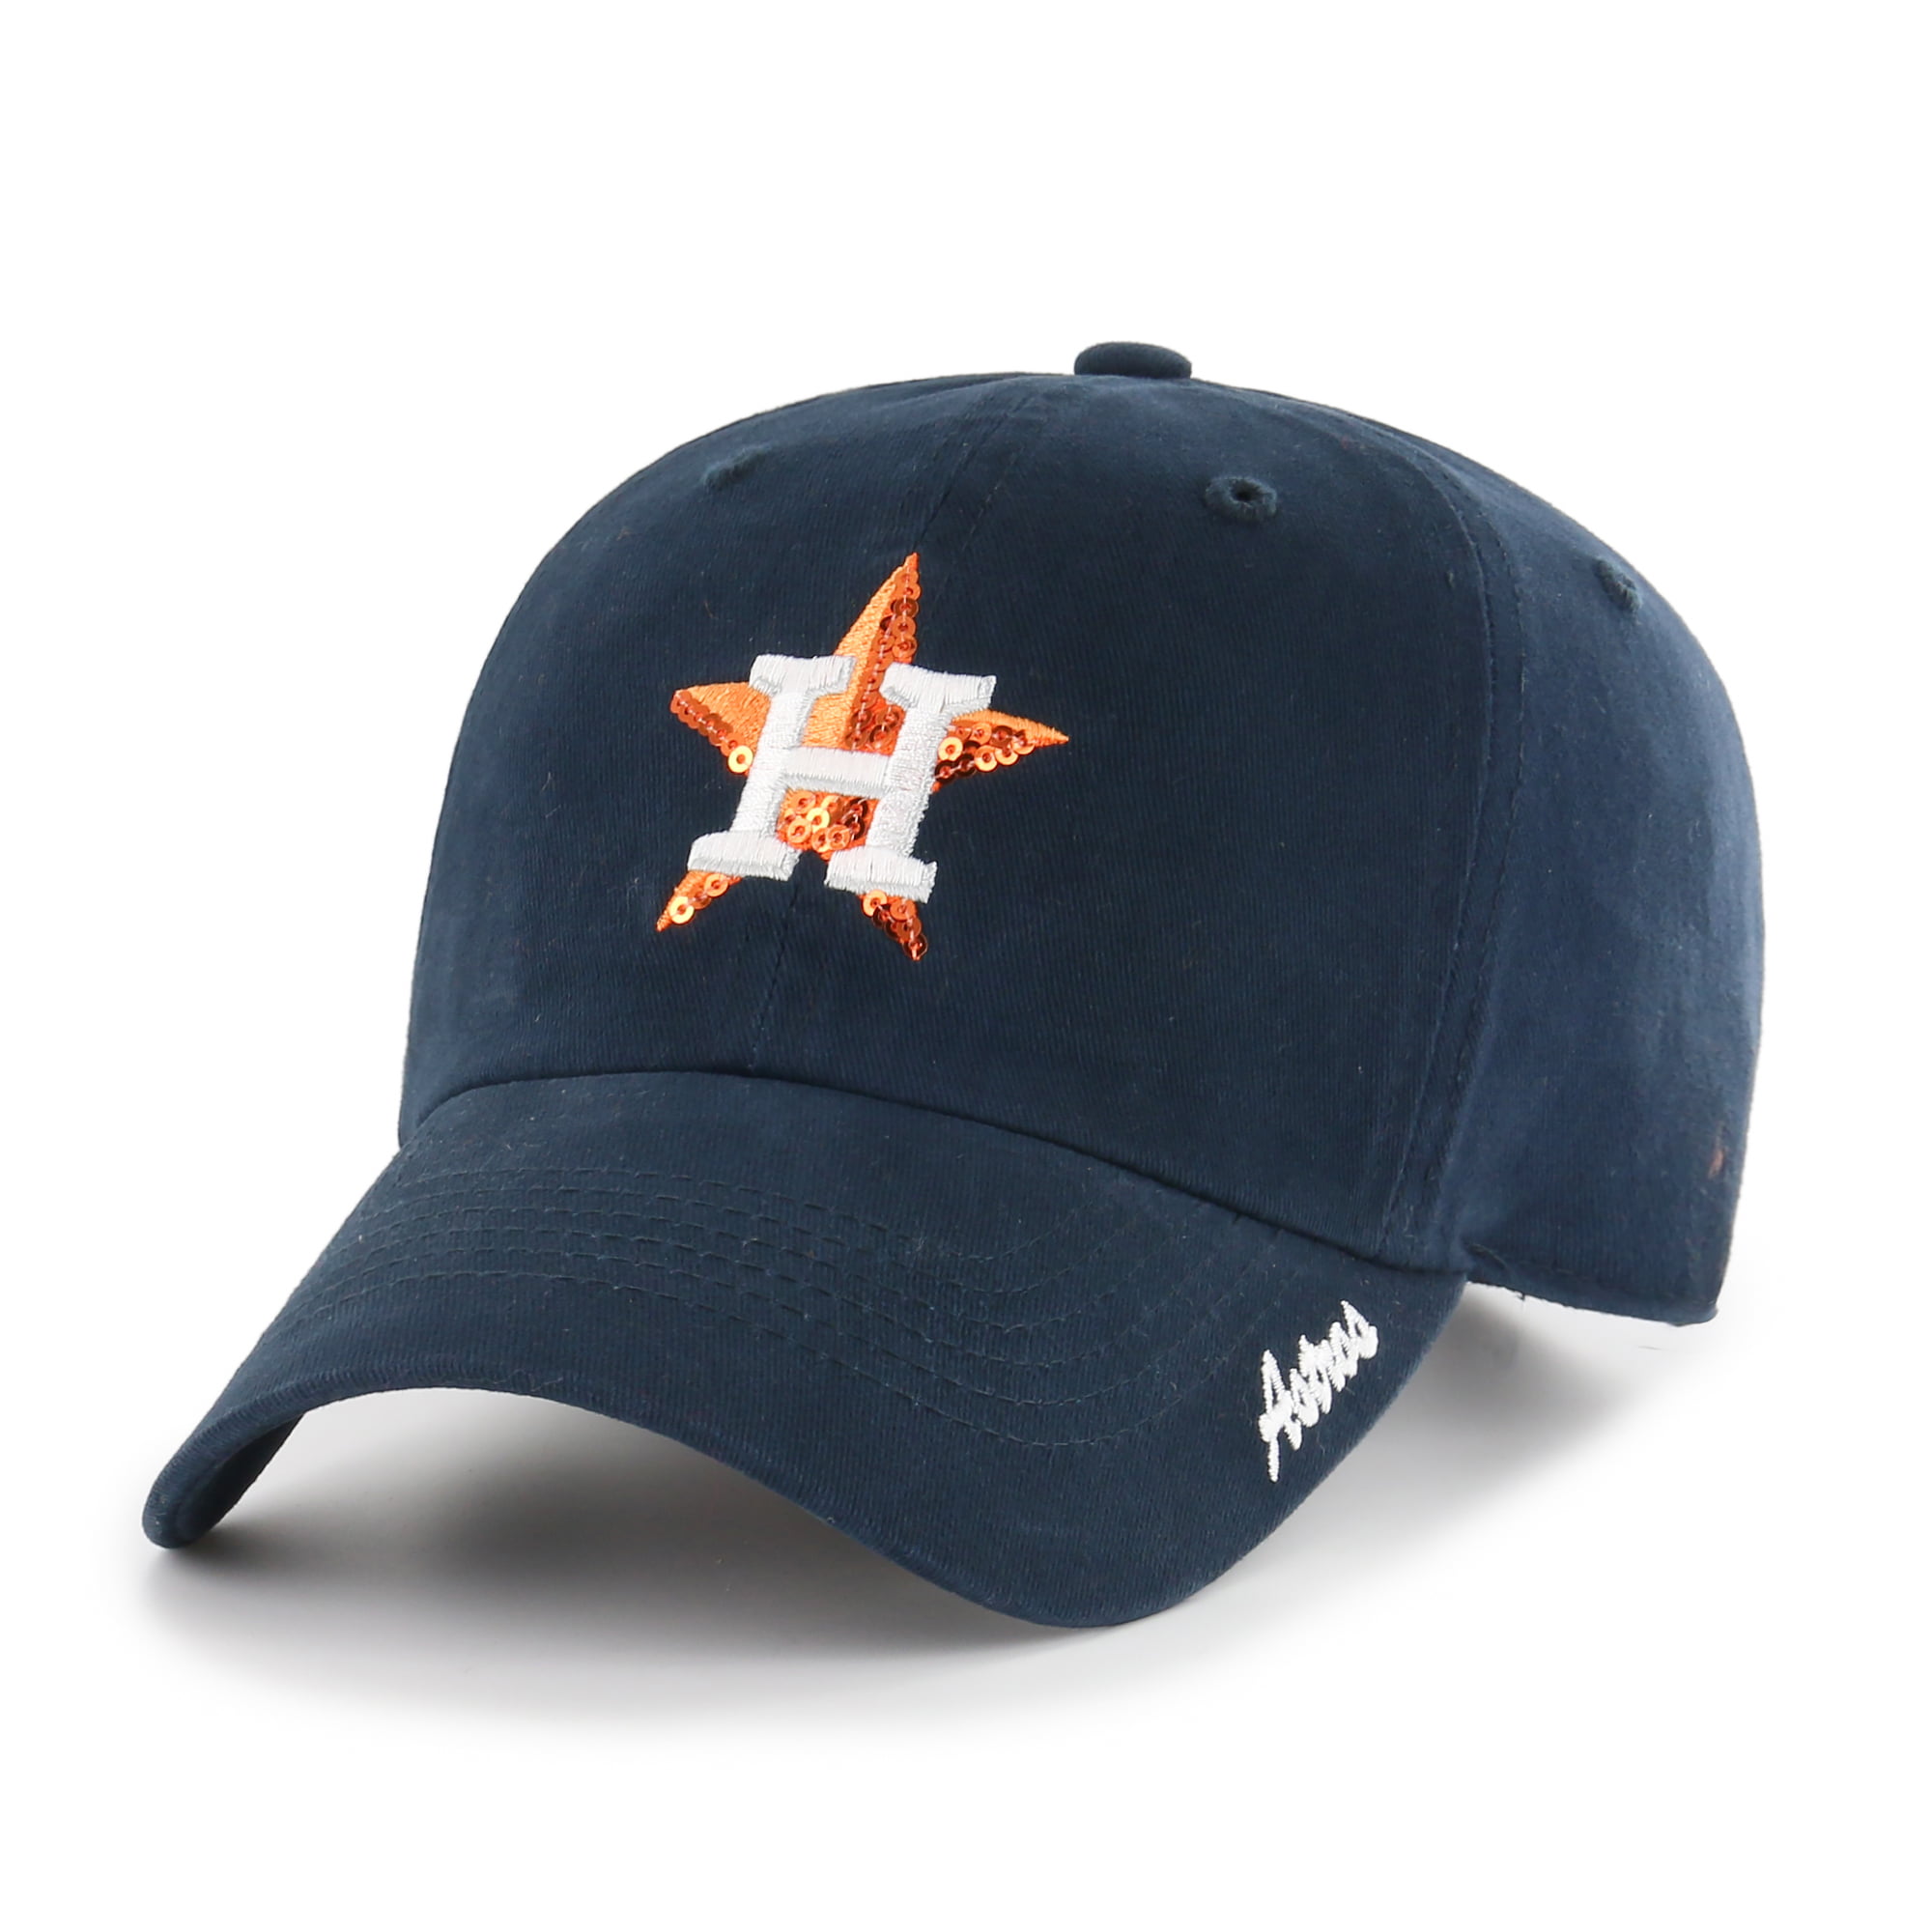 MLB Houston Astros Sparkle Women's Adjustable Cap/Hat by Fan Favorite